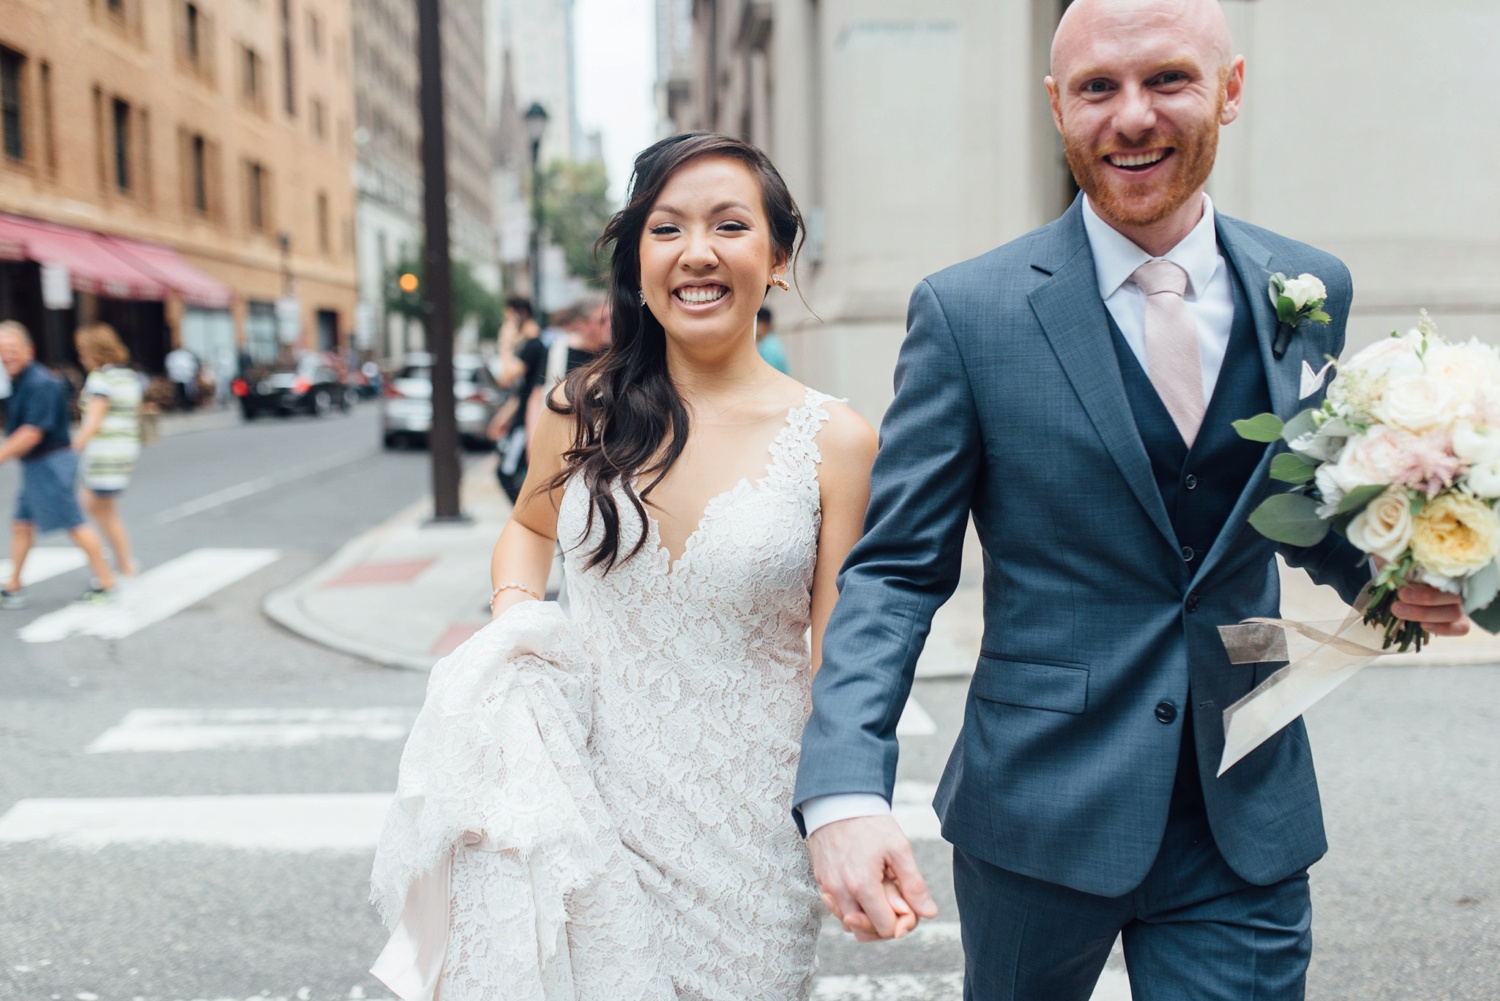 Meifung + David - Tenth Presbyterian Church - Rittenhouse Square Philadelphia Wedding - Alison Dunn Photography photo